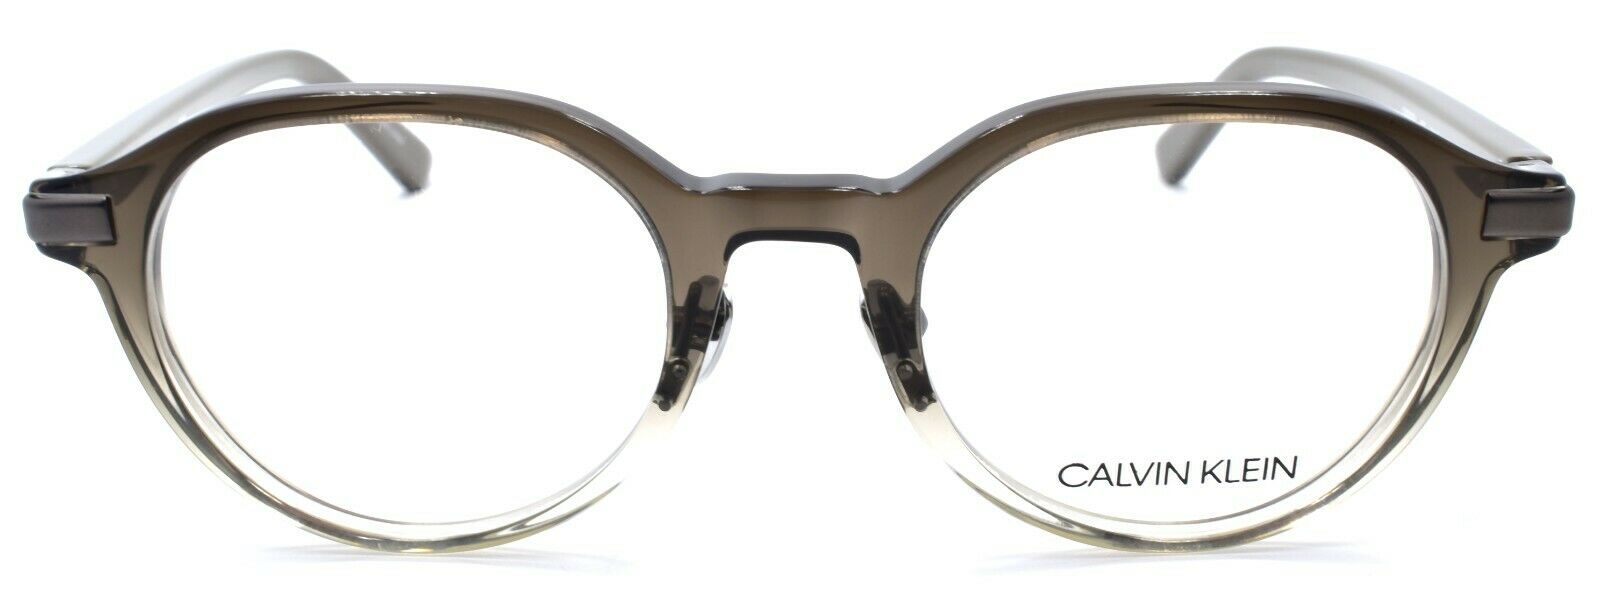 2-Calvin Klein CK20504 079 Men's Eyeglasses Frames 48-21-145 Smoke / Crystal-883901122947-IKSpecs